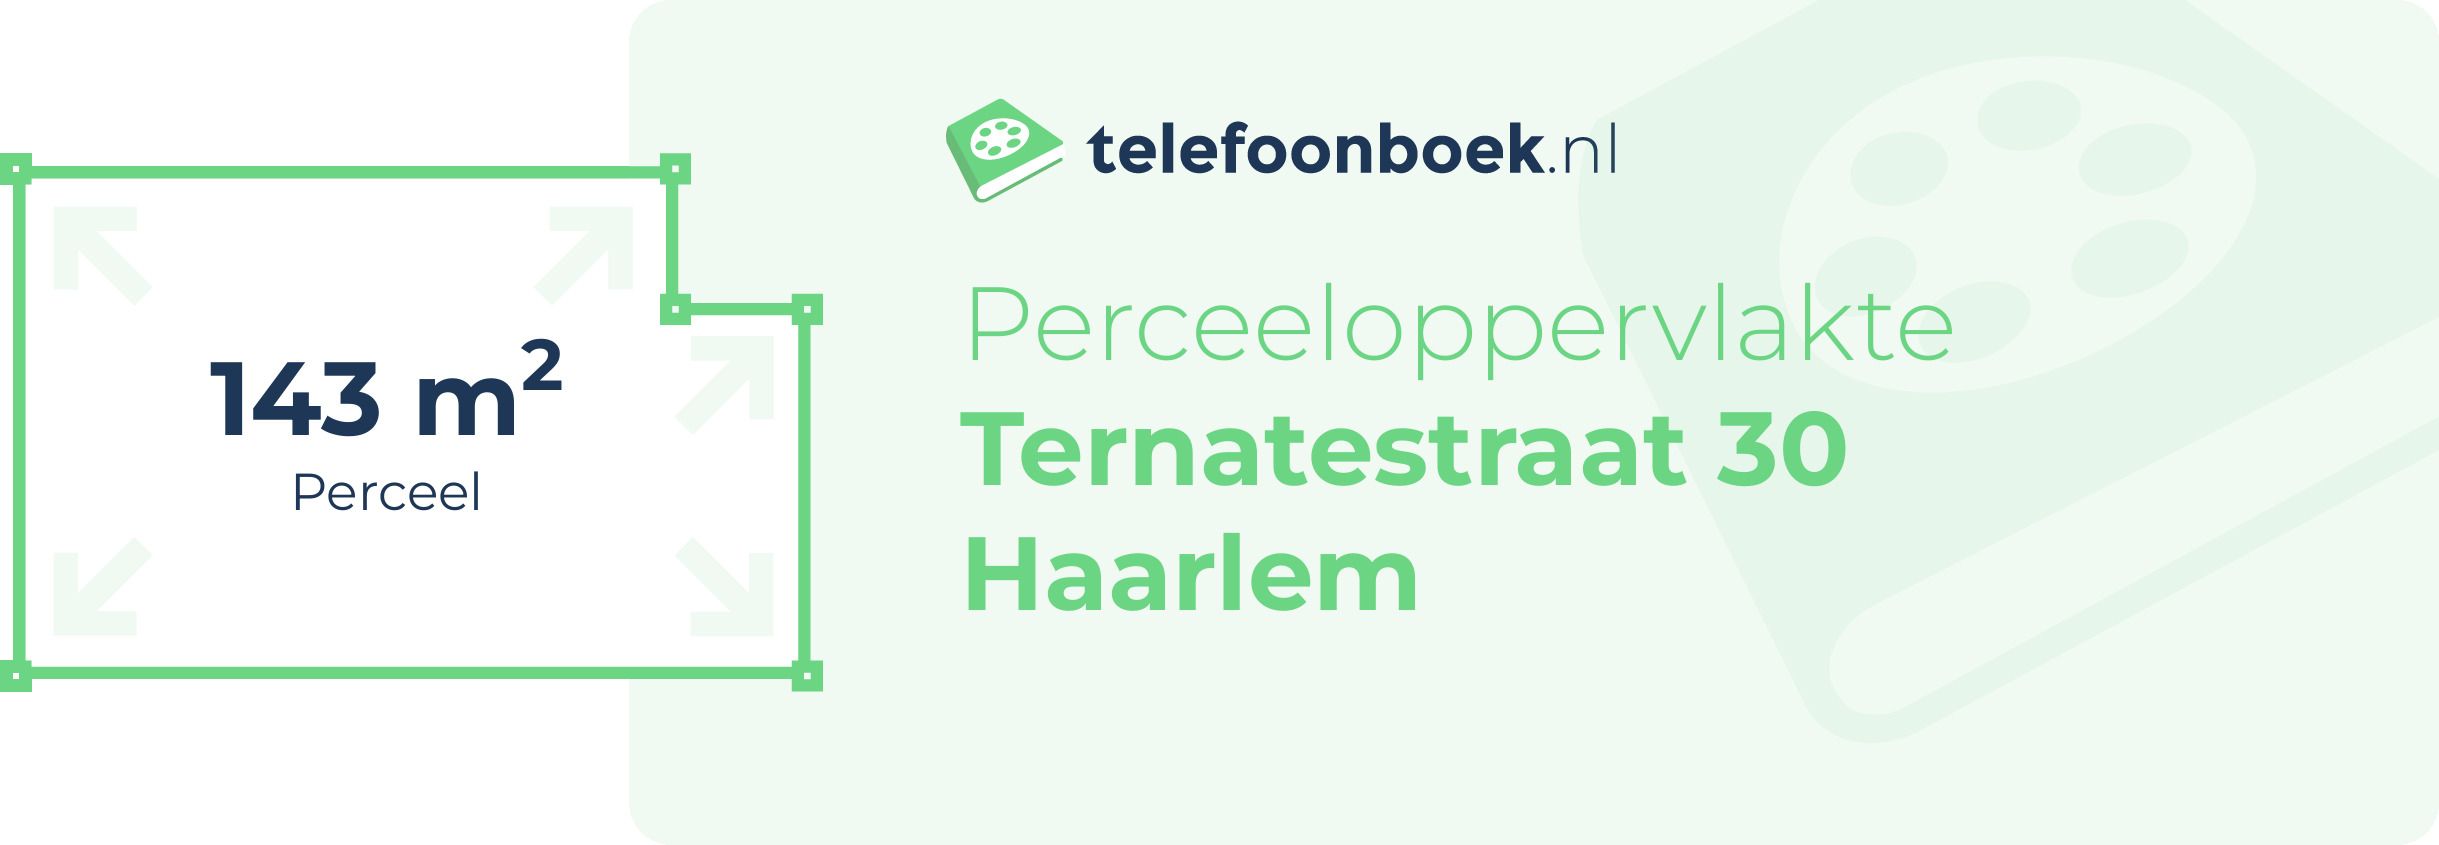 Perceeloppervlakte Ternatestraat 30 Haarlem